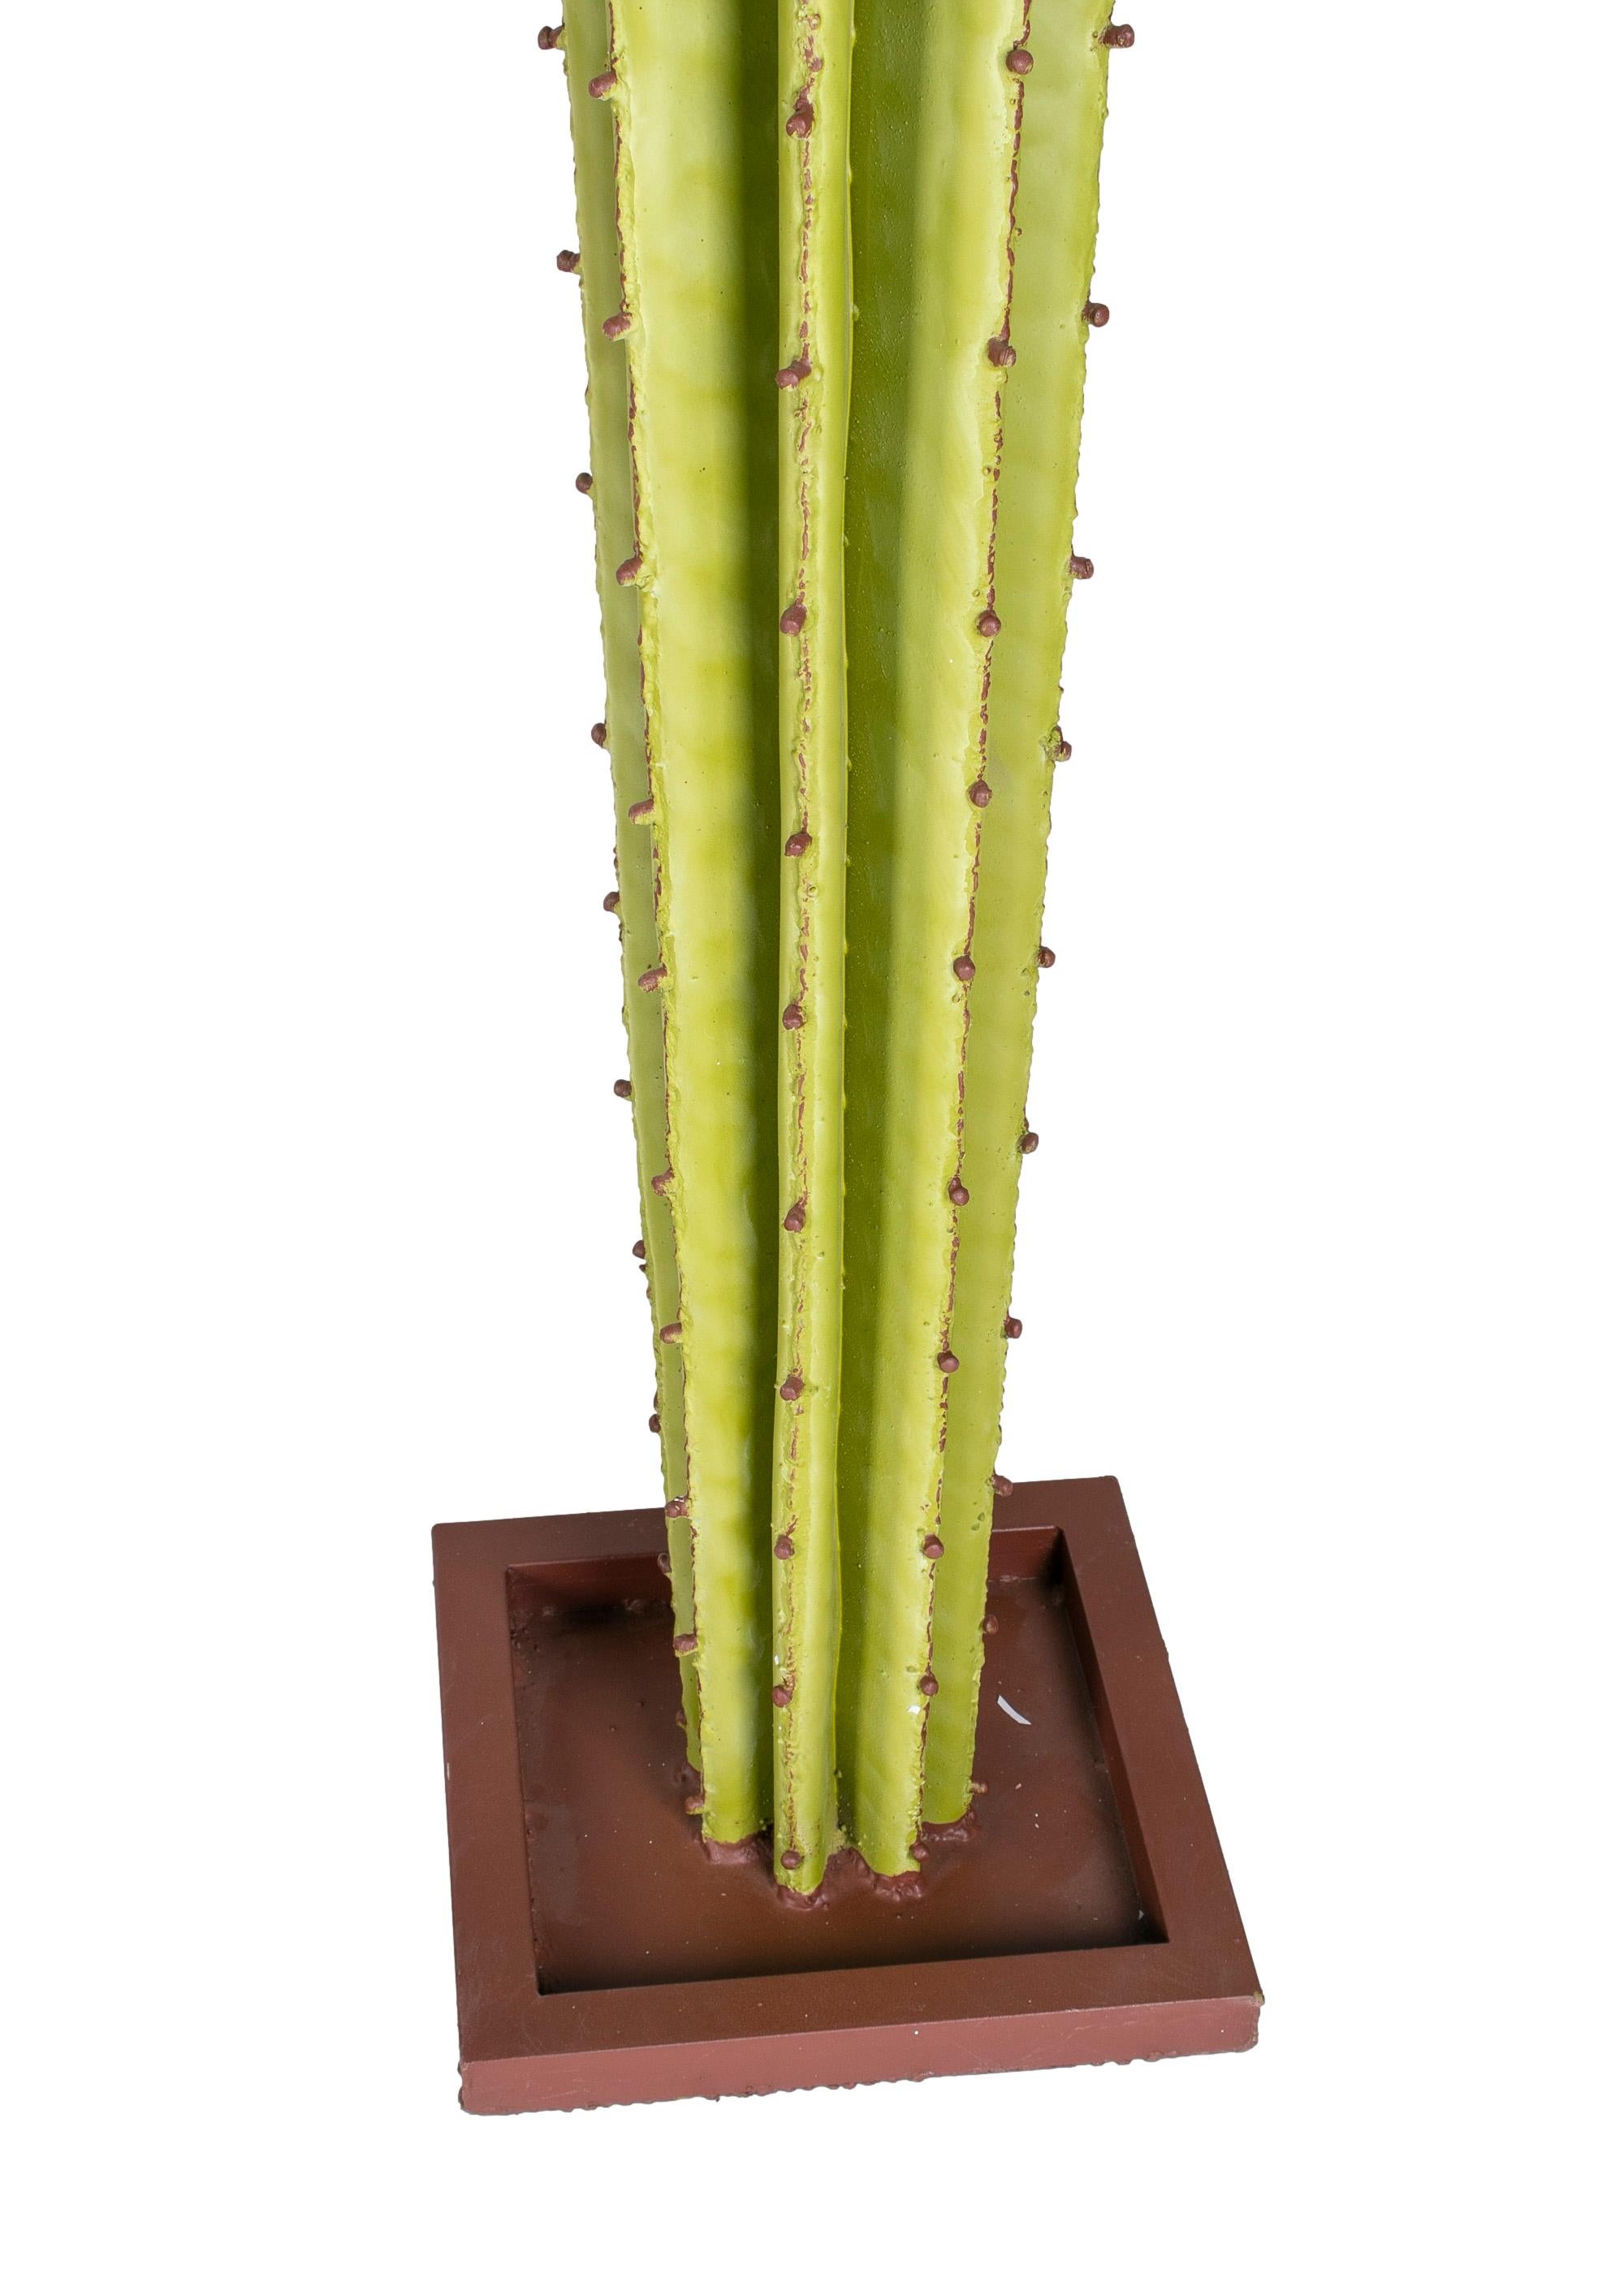 4 sided cactus